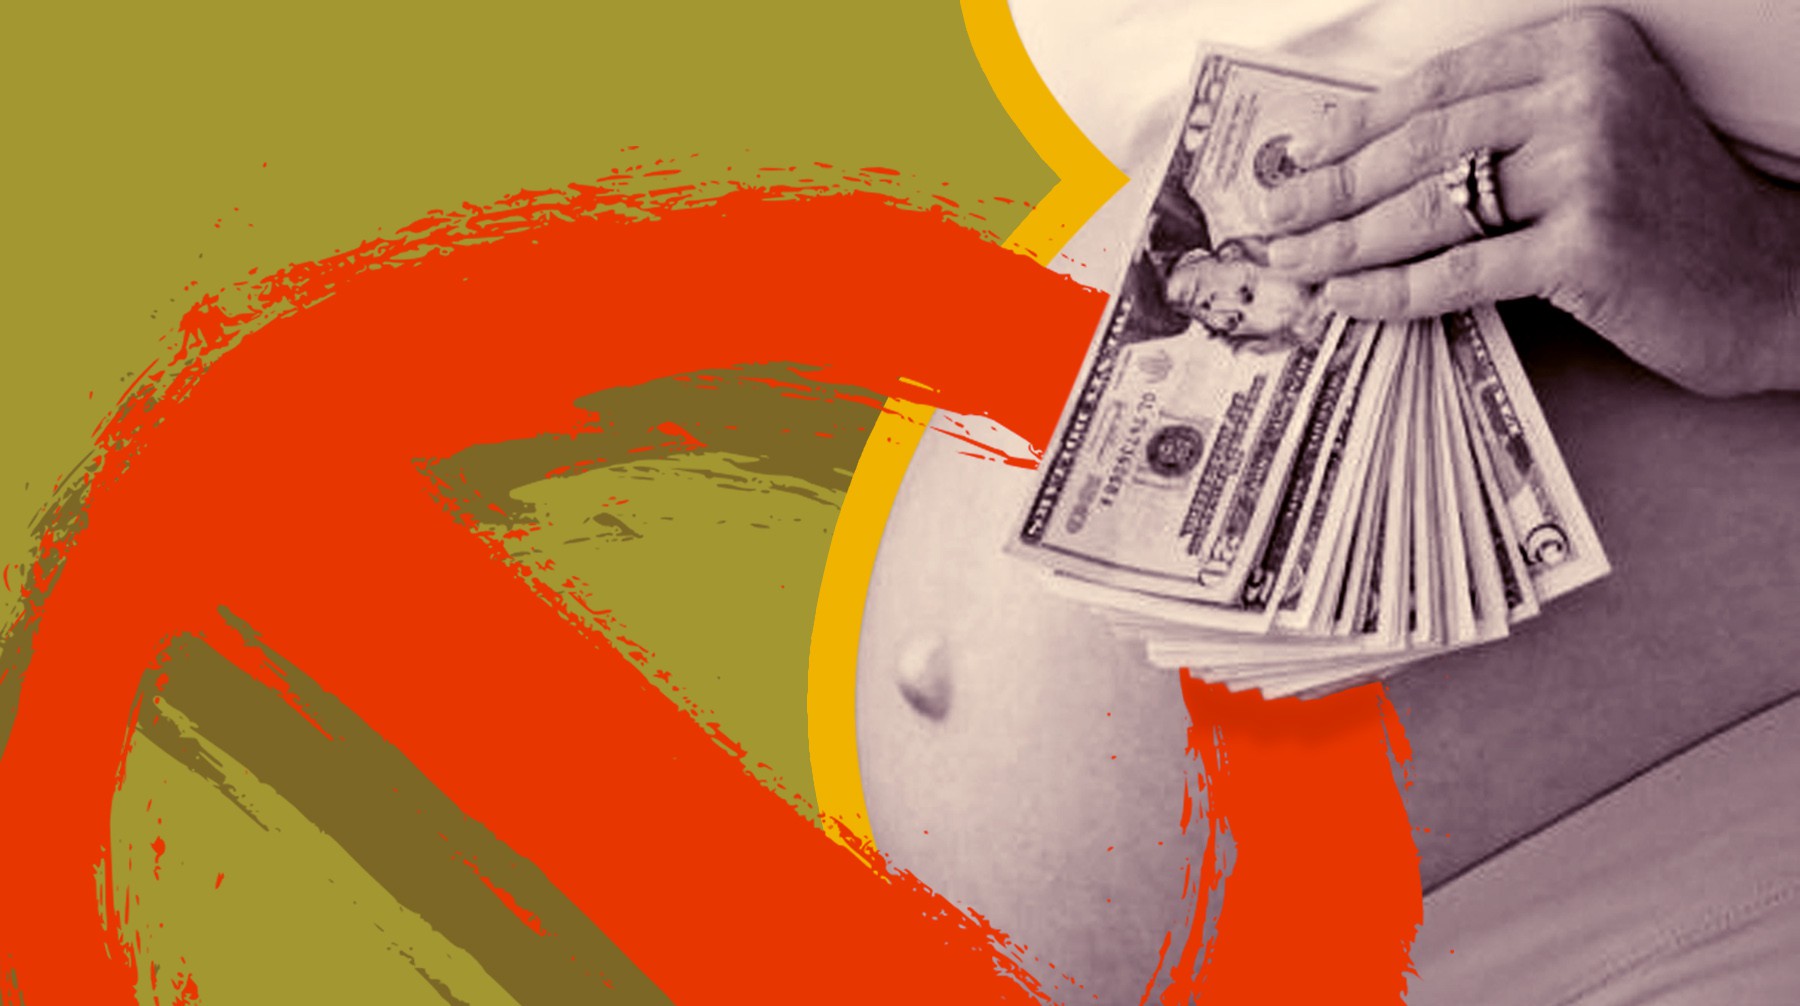 Dailystorm - В Ассоциации репродукции поддержали закон о запрете суррогатного материнства «на экспорт»